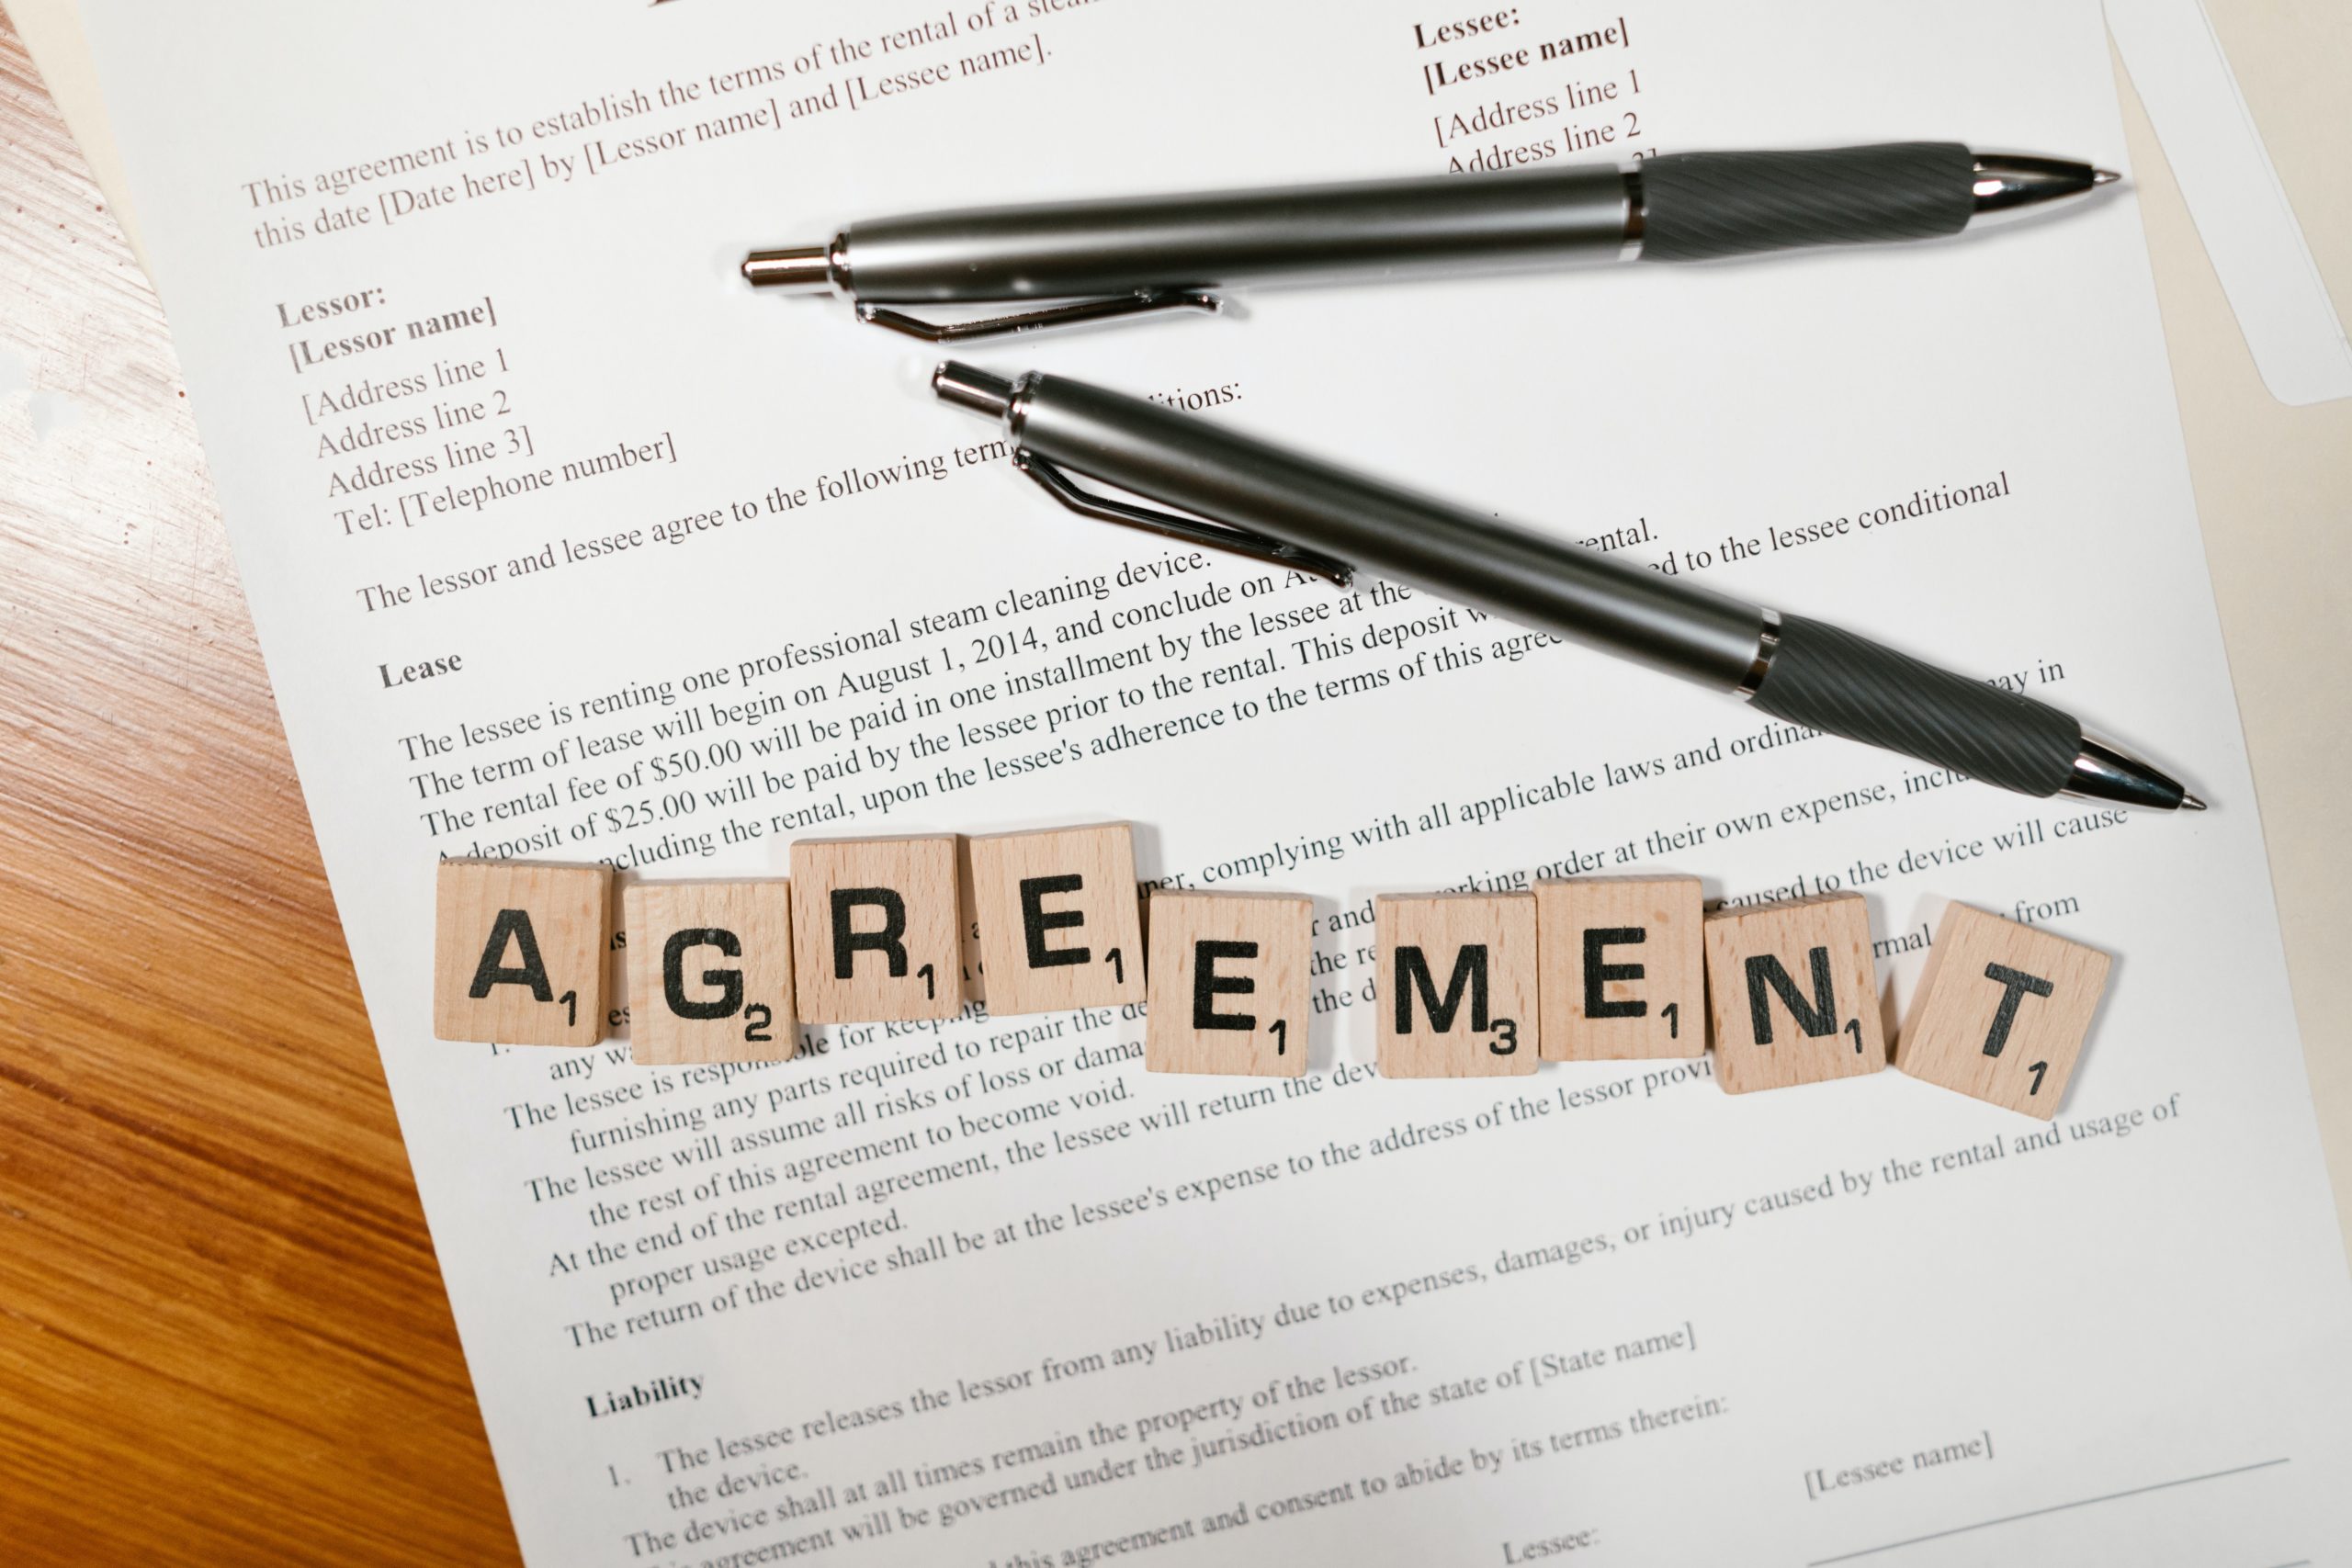 Agreement written with Scrabble blocks on an agreement document